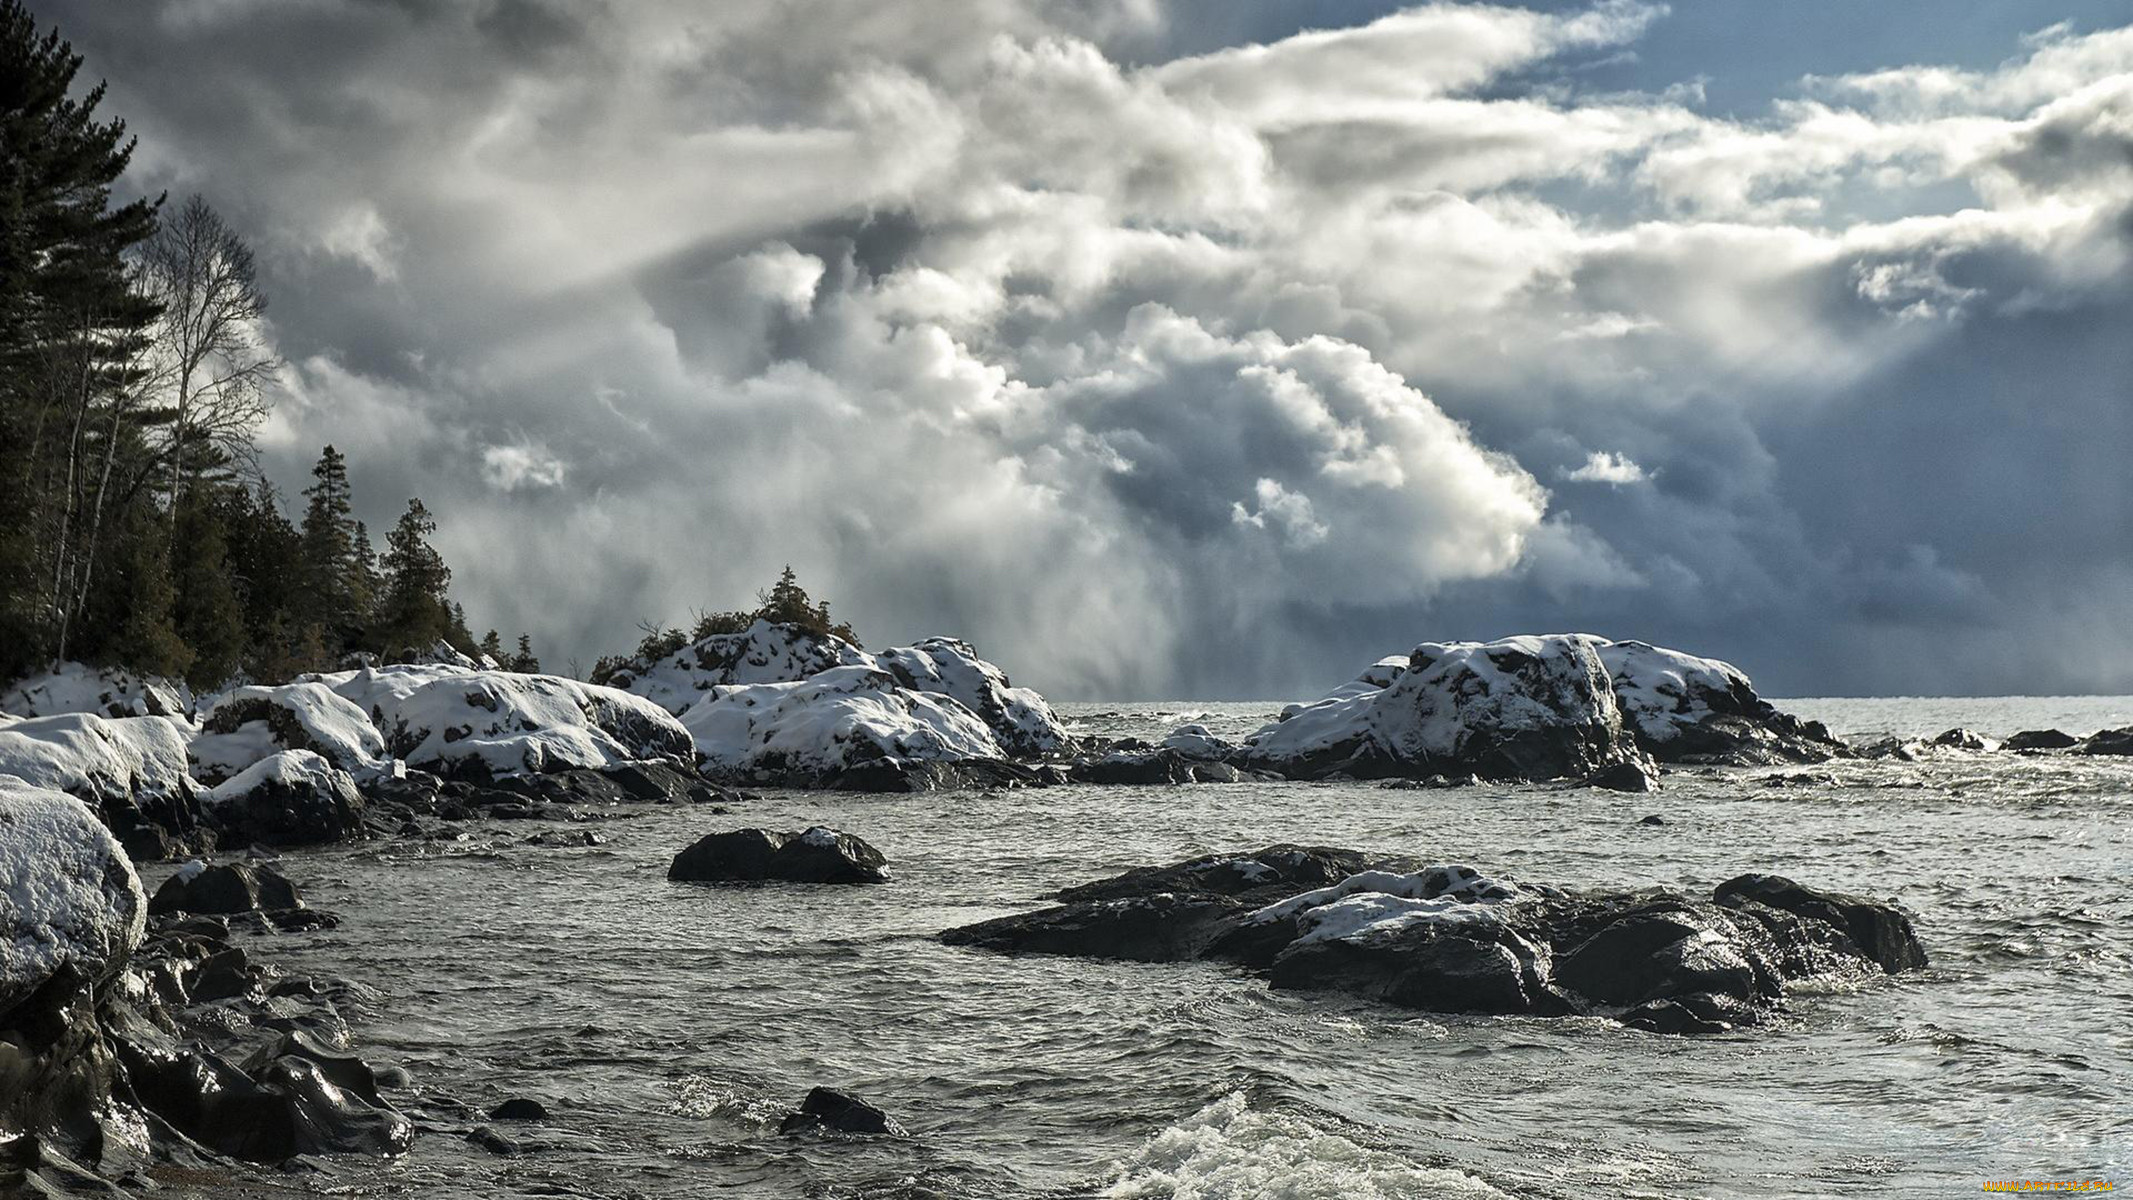 Природа шторма. Шторм на Ладоге. Шторм на Ладожском озере. Скандинавия скалы шторм. Волны на Ладожском озере.